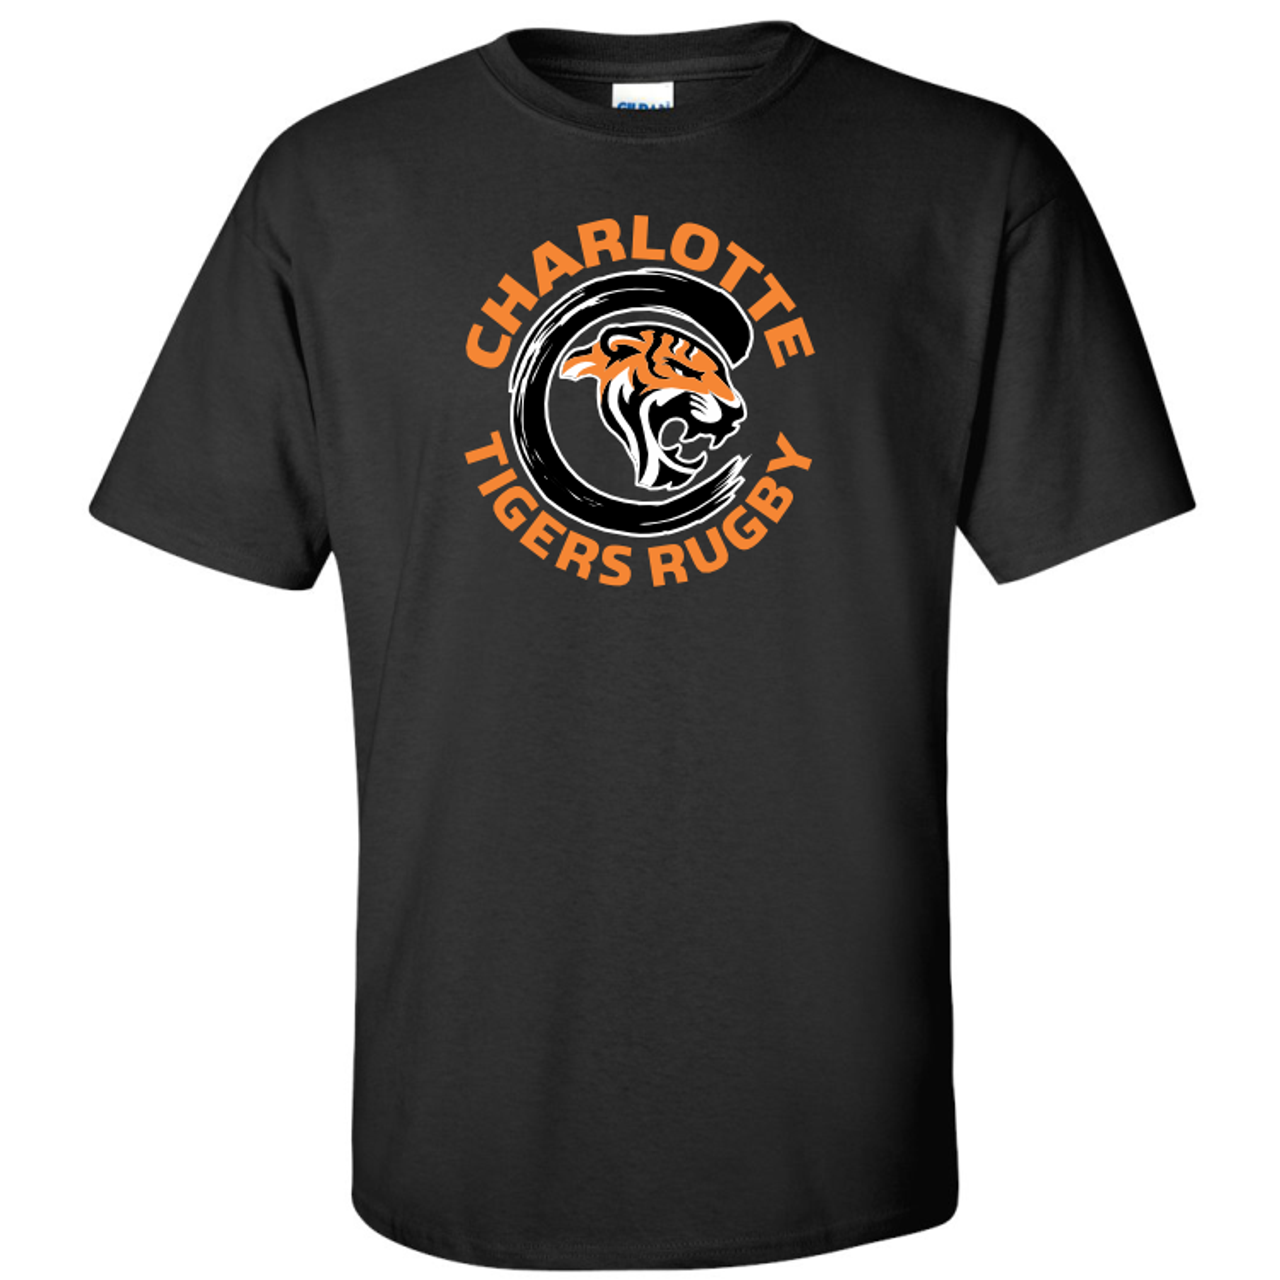 Charlotte Tigers Cotton T-Shirt, Black